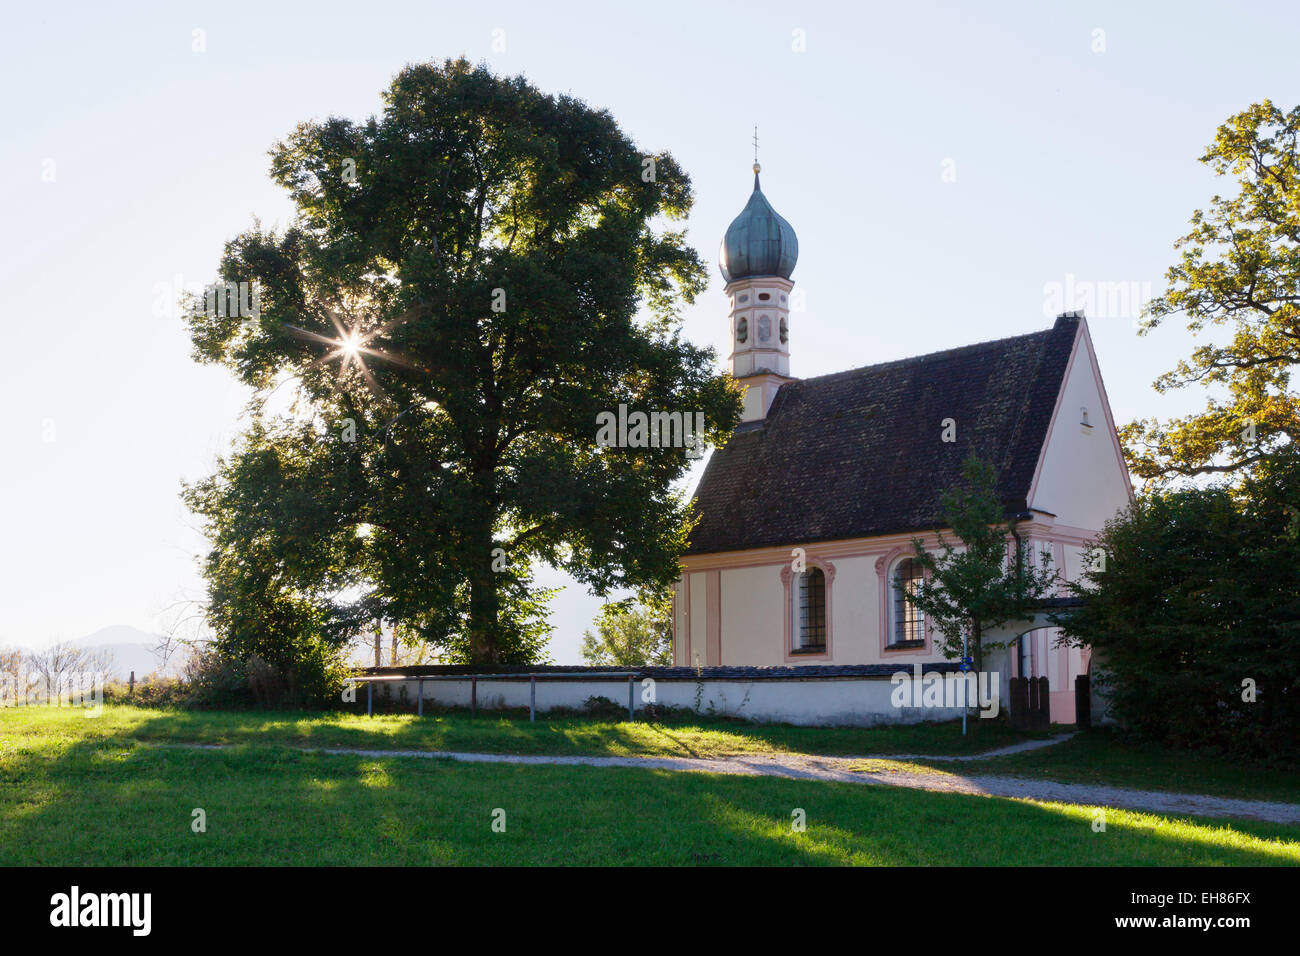 Ramsachkirche church at Murnauer Moos Moor, Murnau am Staffelsee, Upper Bavaria, Bavaria, Germany, Europe Stock Photo